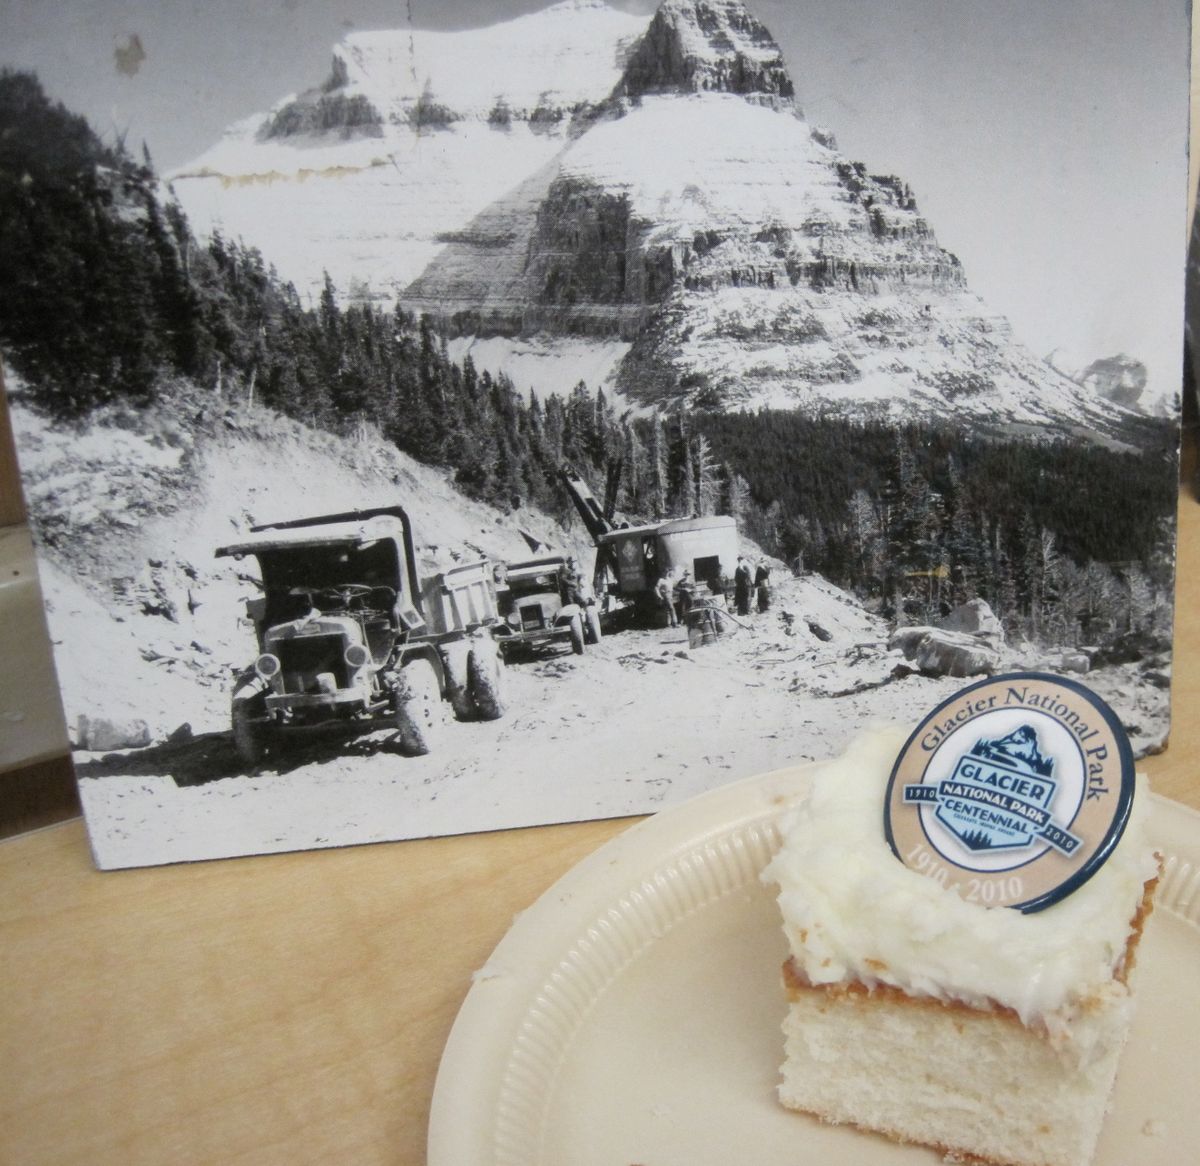 The Glacier National Park Centennial was celebrated with cake. (Cheryl-Anne Millsap / Photo by Cheryl-Anne Millsap)